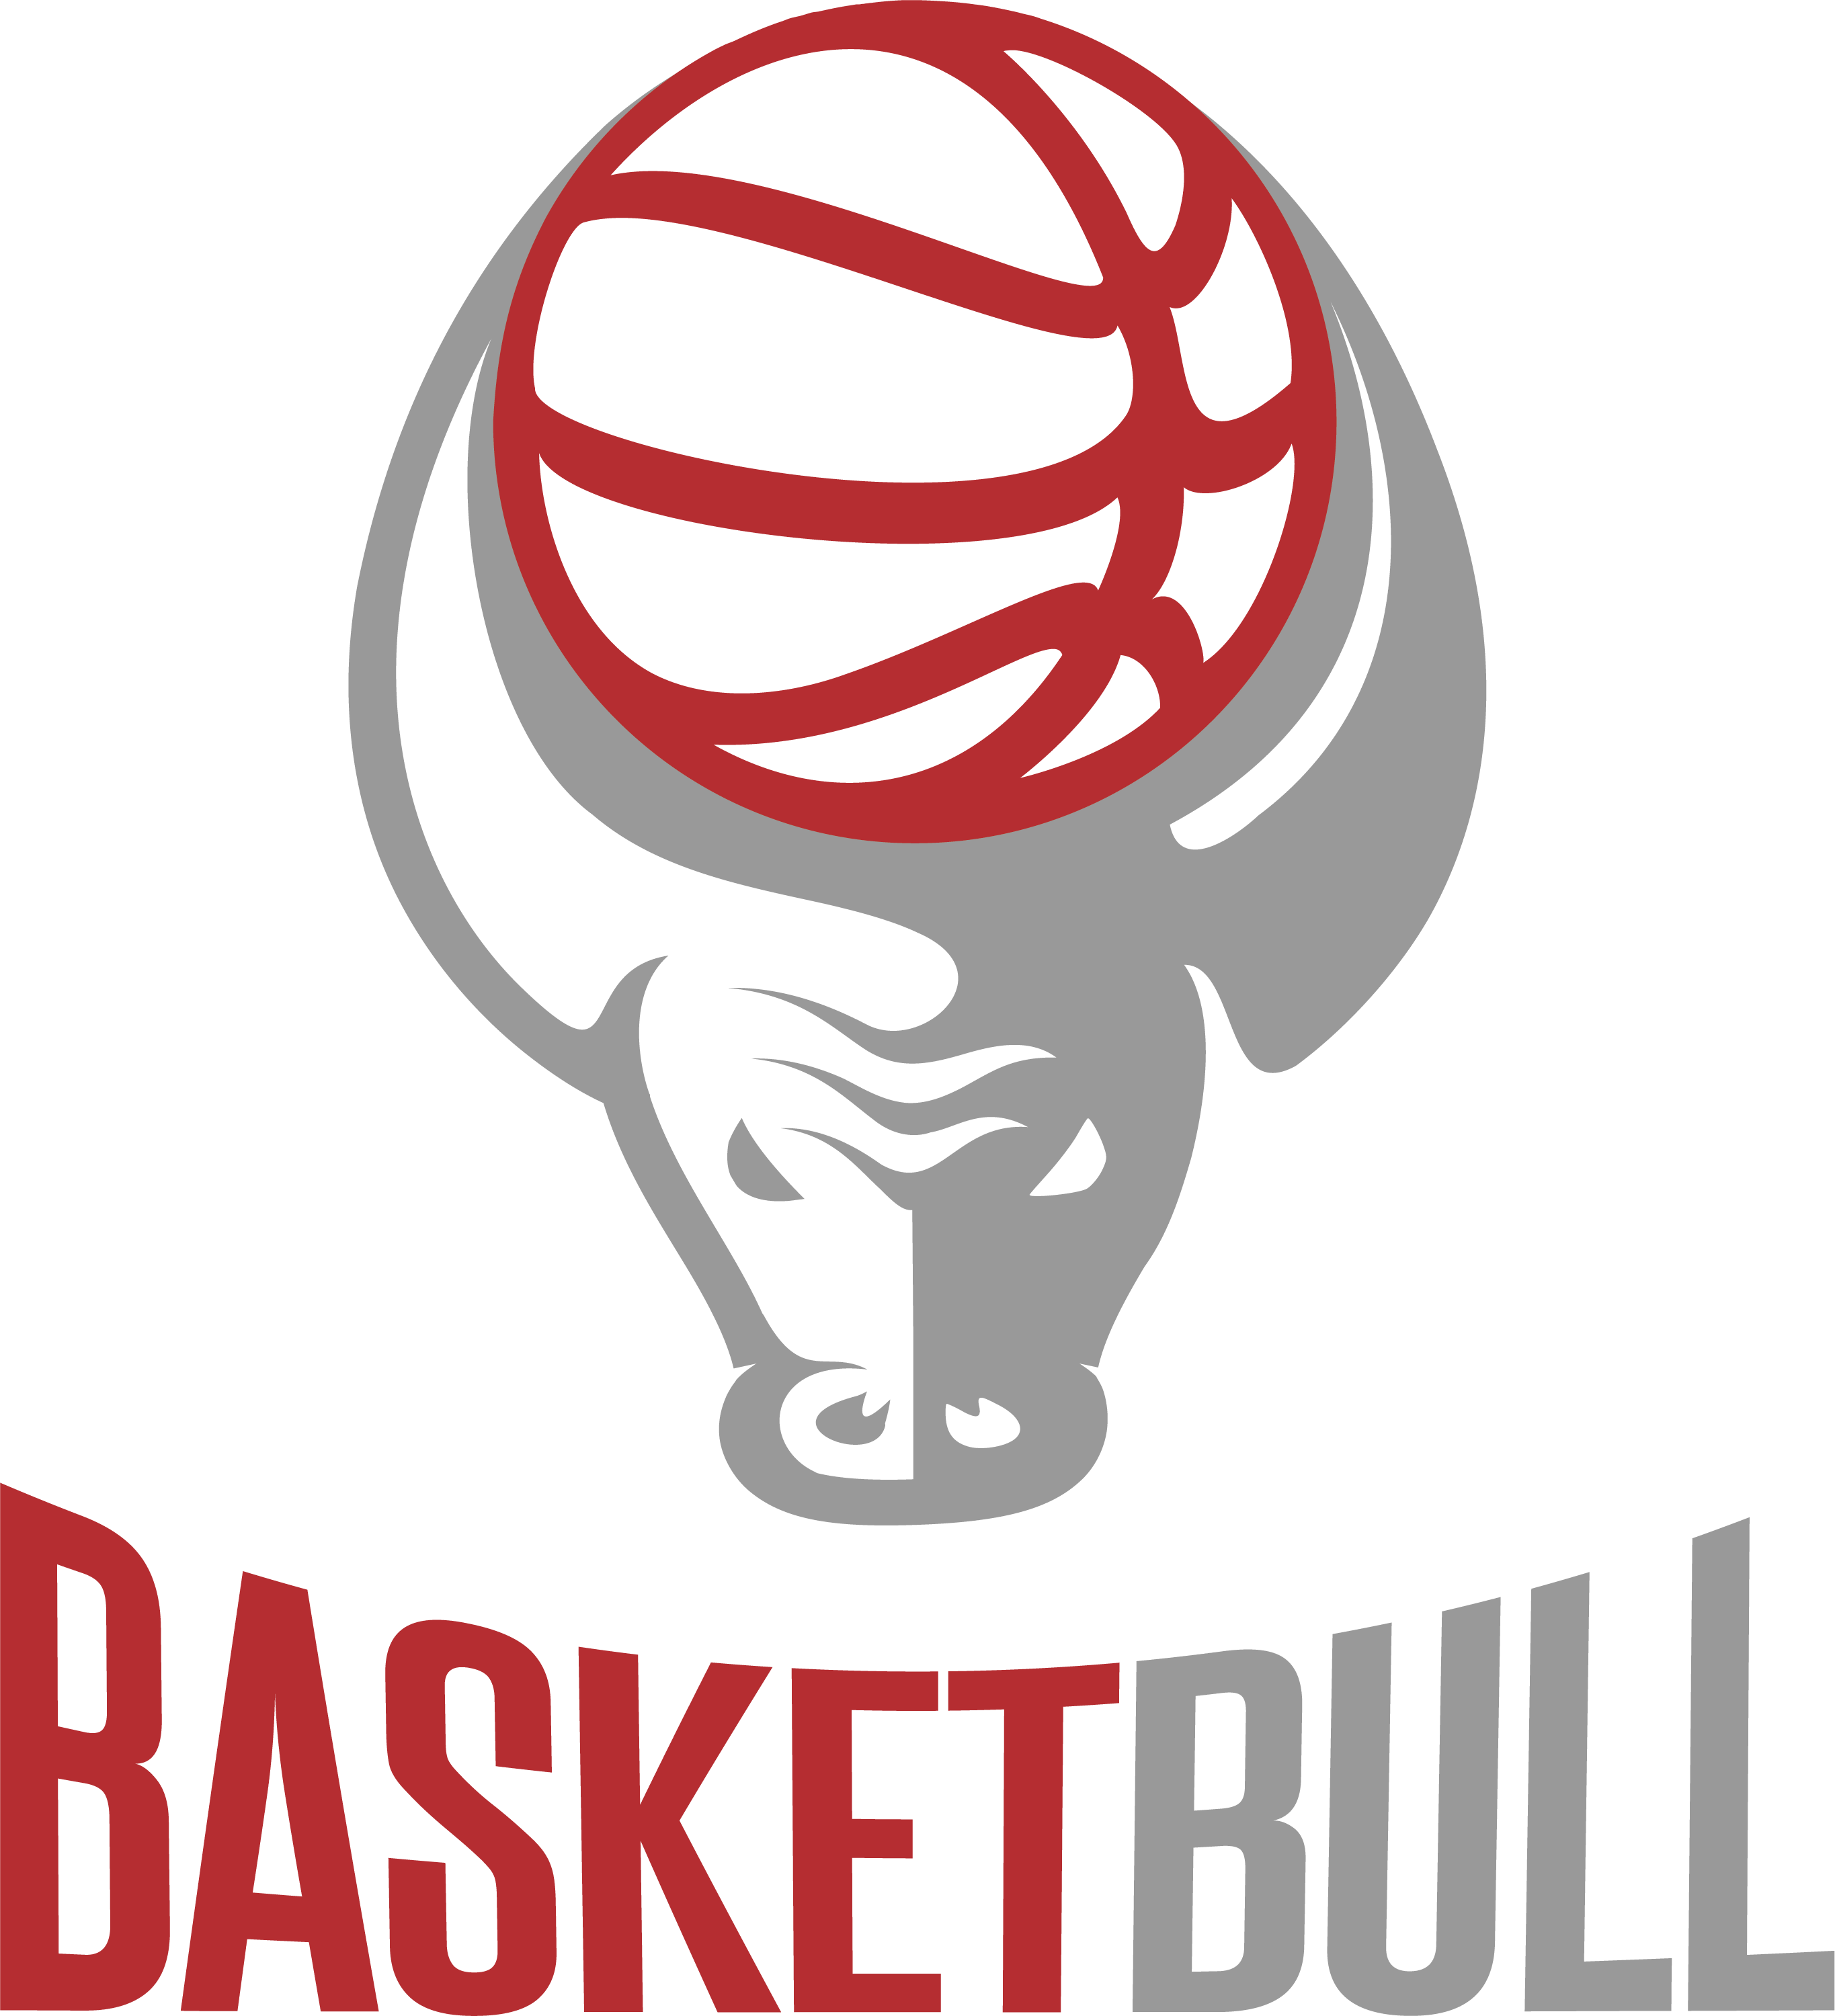 Basketbull_Primary_Full Color